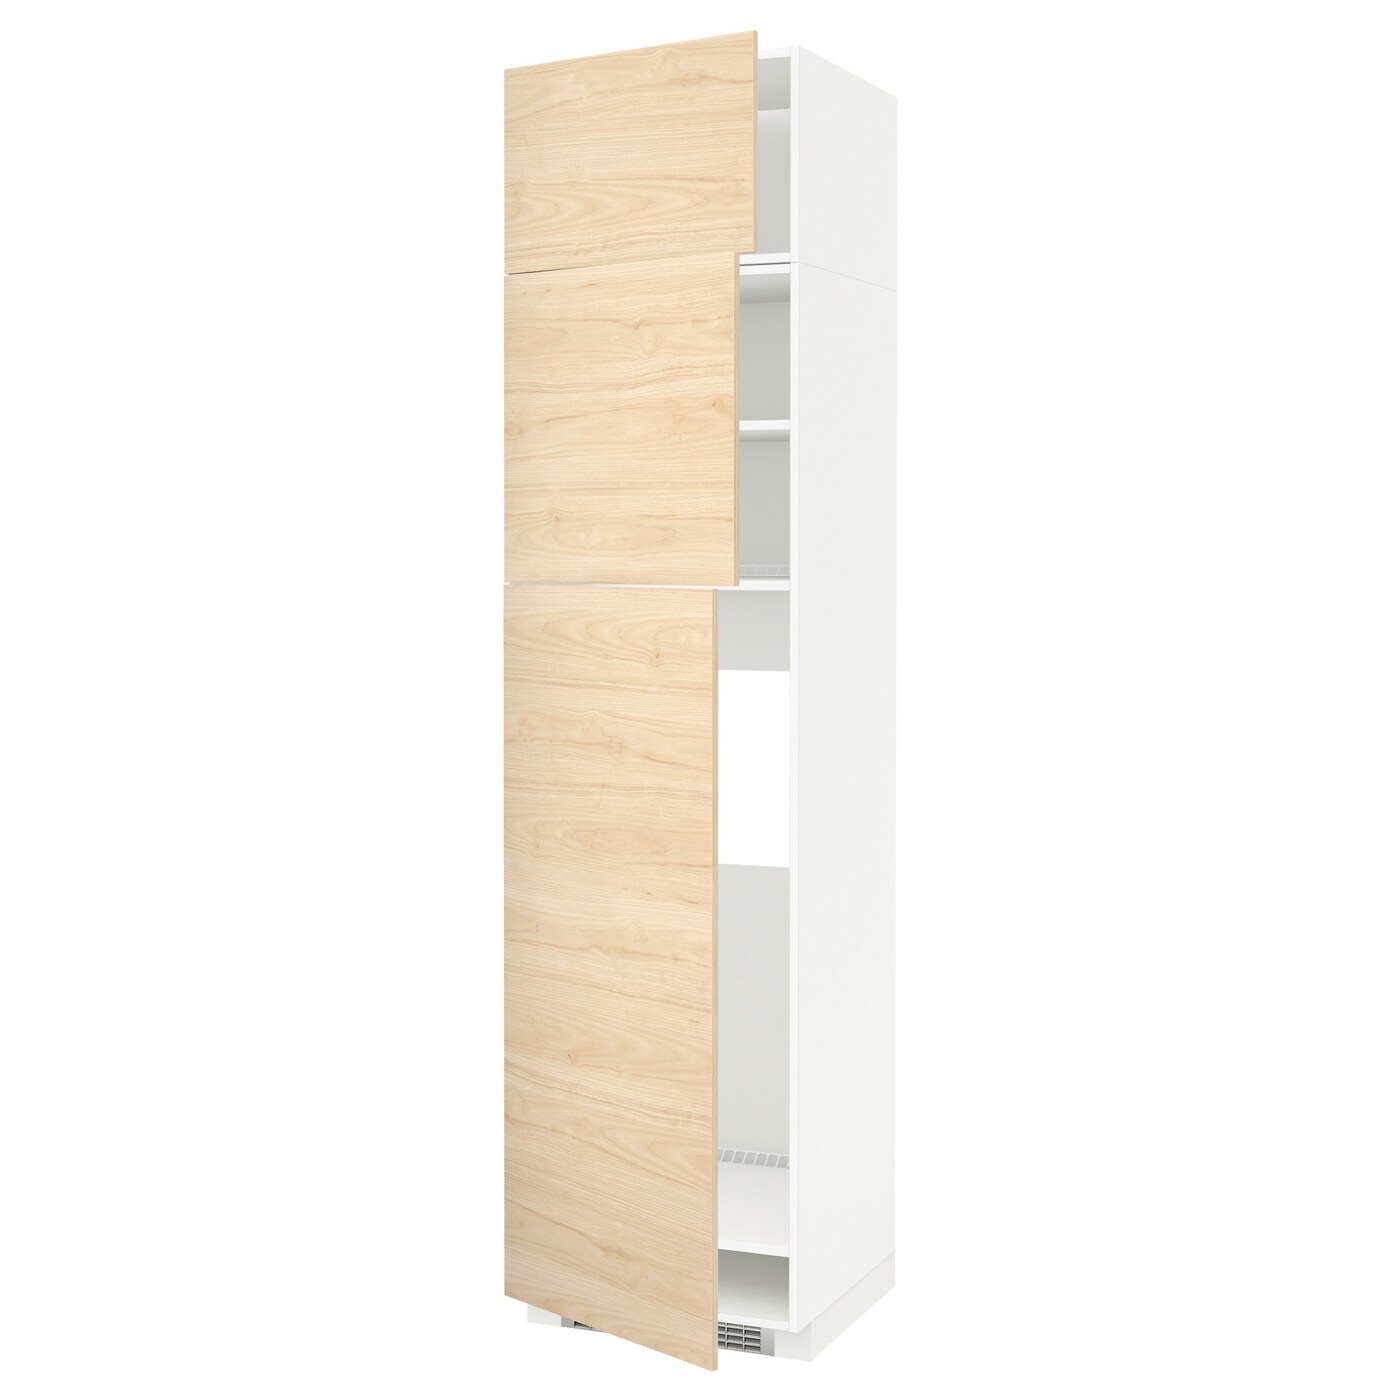 Высокий кухонный шкаф - IKEA METOD/МЕТОД ИКЕА, 240х60х60 см, белый/под беленый дуб